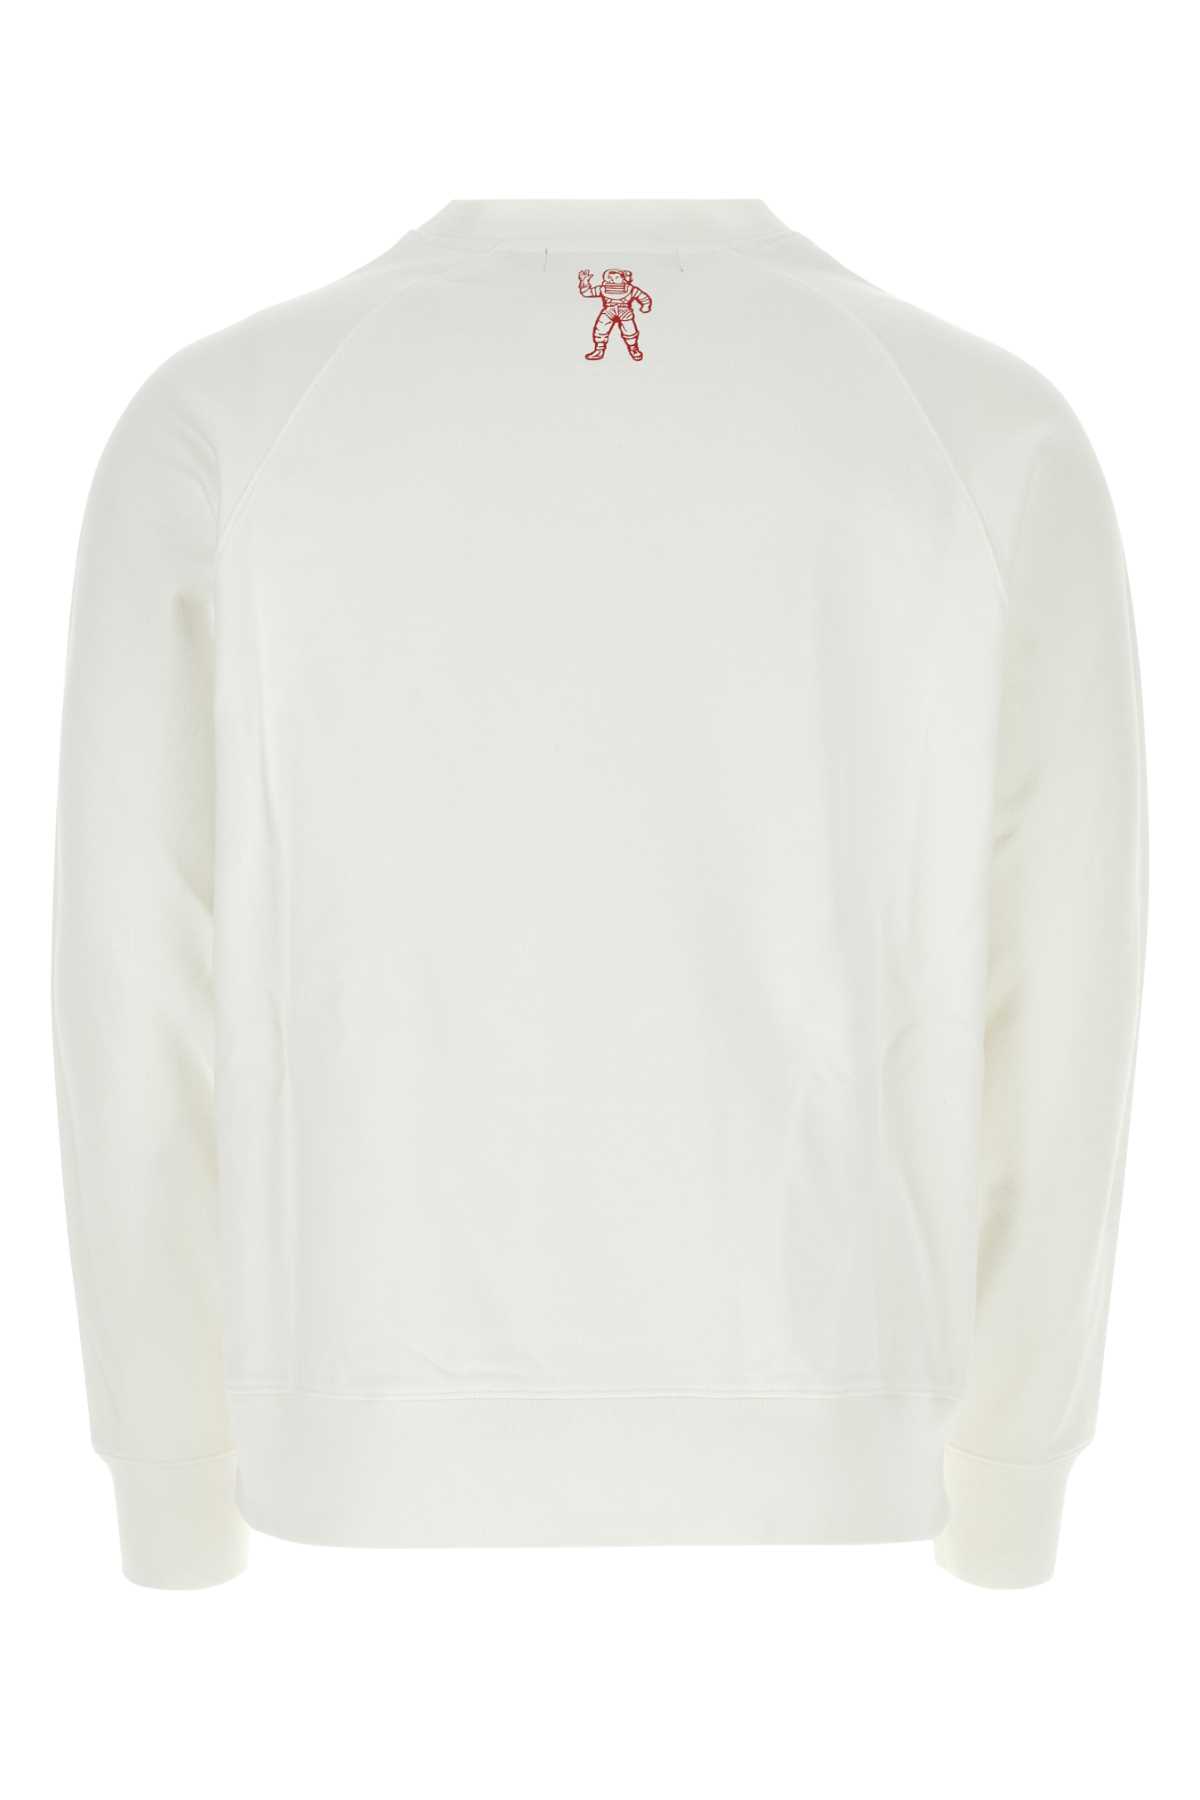 Billionaire Boys Club White Cotton Sweatshirt